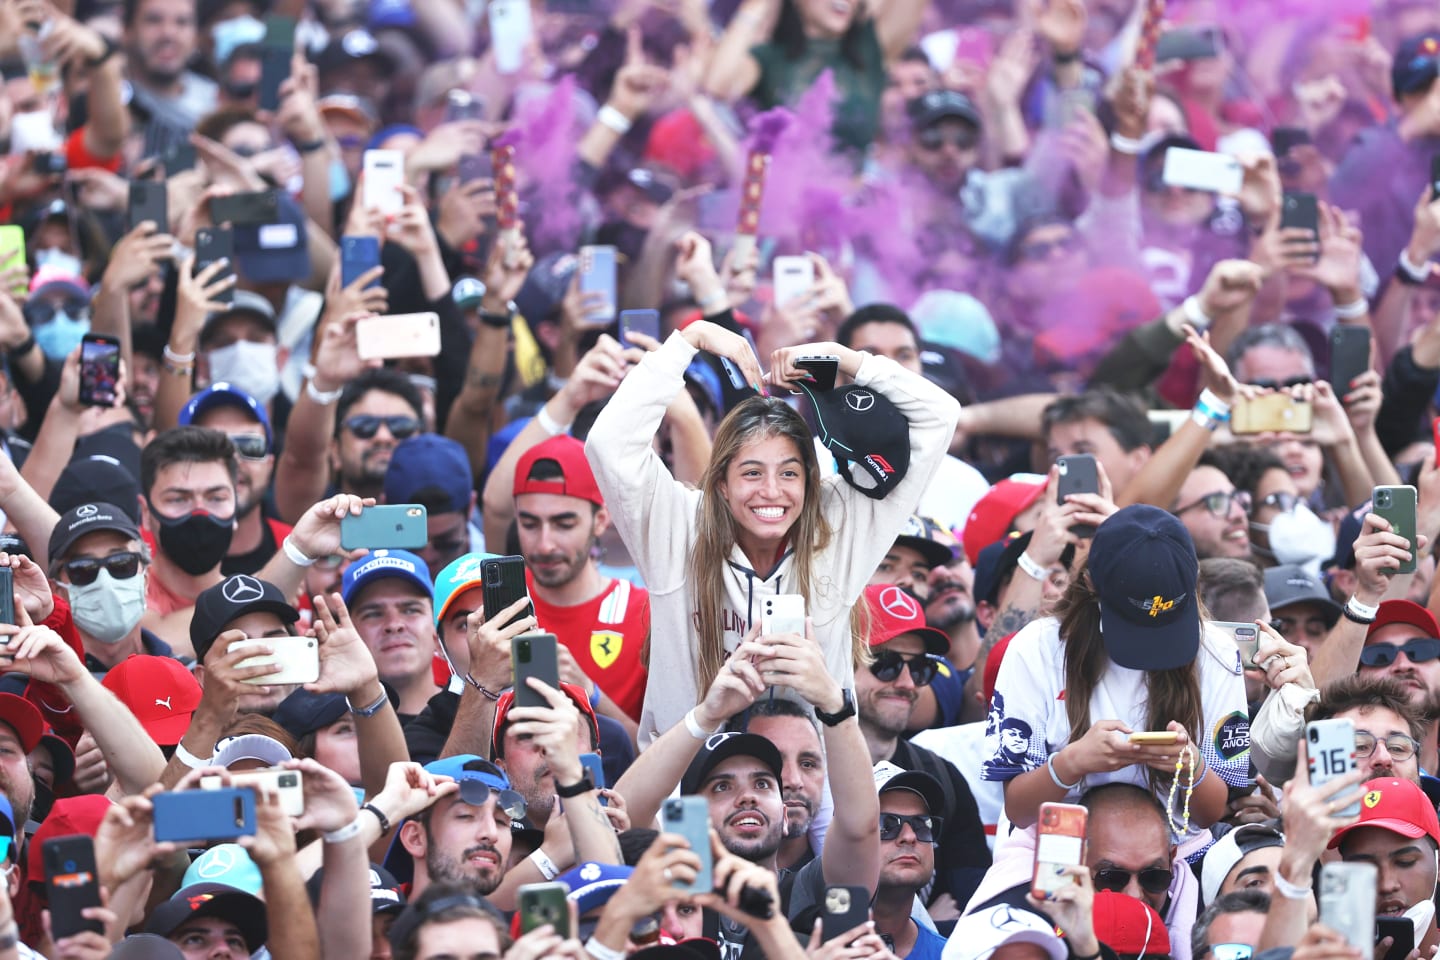 SAO PAULO, BRAZIL - NOVEMBER 14: Fans enjoy the podium celebrations during the F1 Grand Prix of